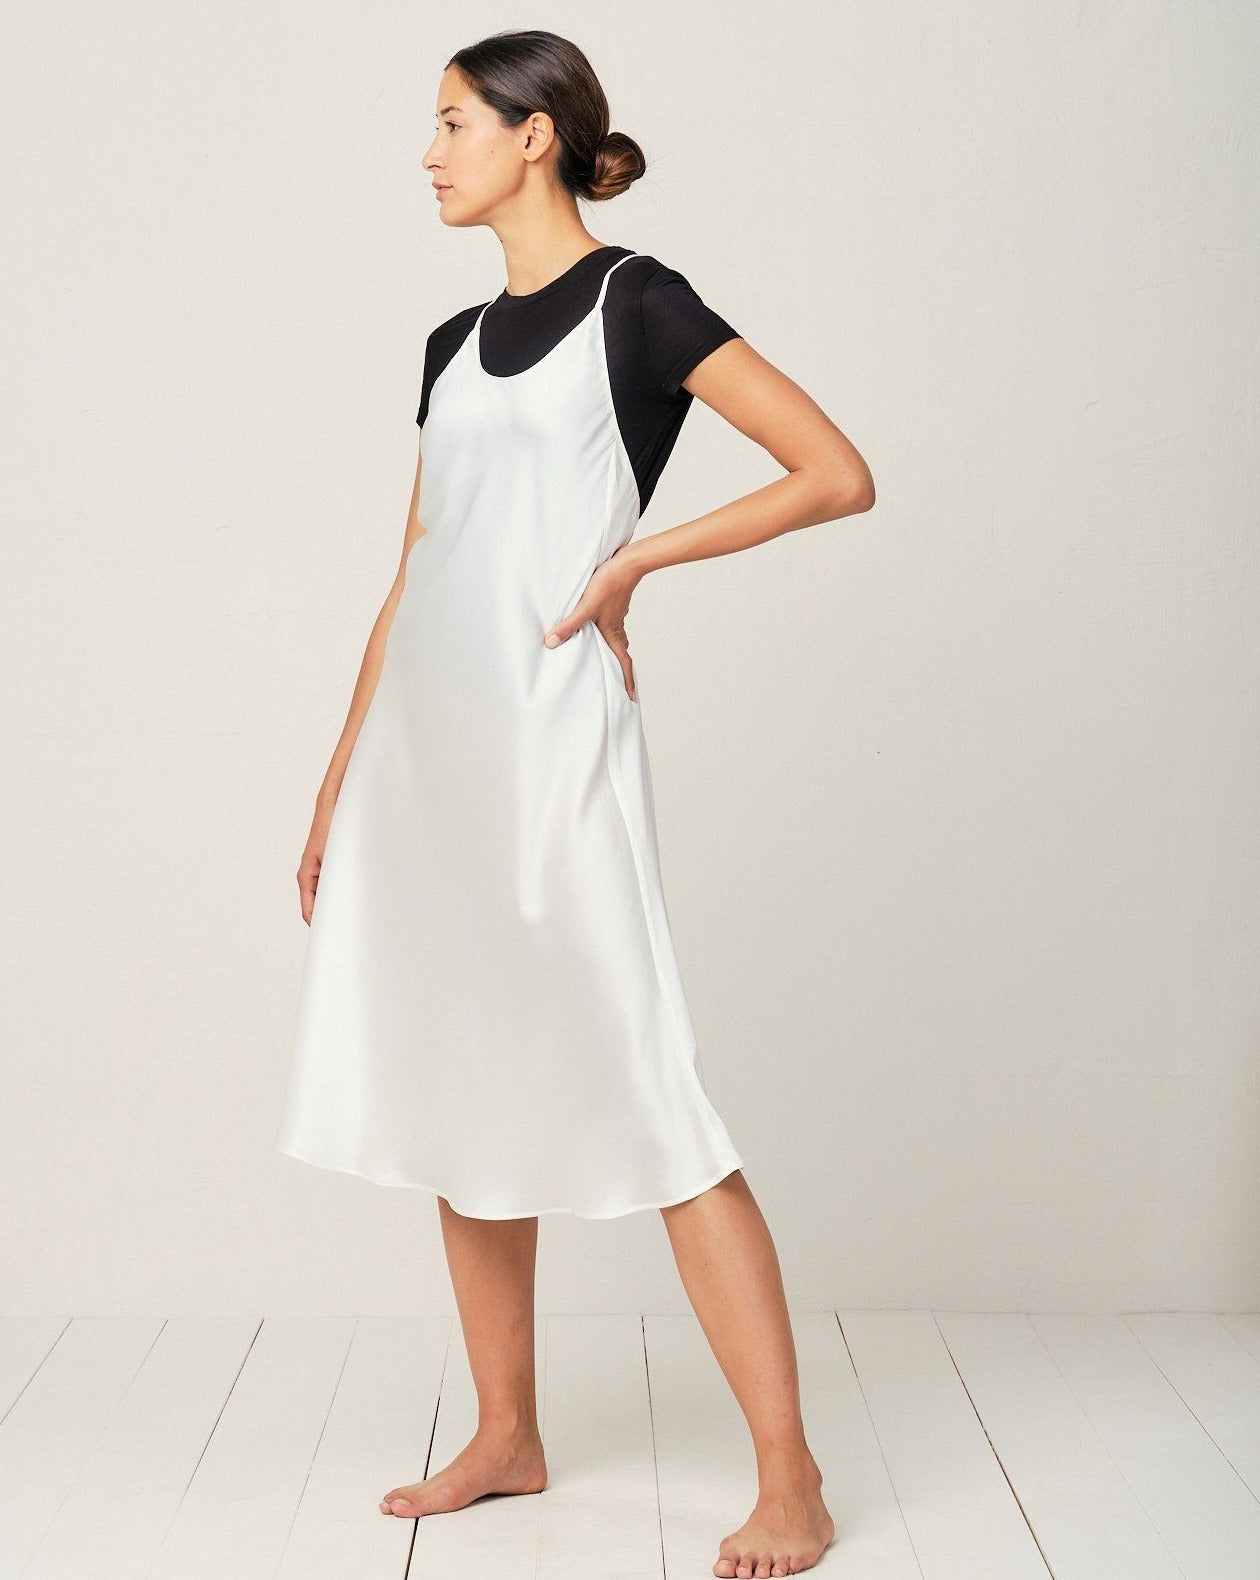 Clara Silk Nightgown in Moonlight White Loungewear, Pyjama, Seidenpyjama, Schlafanzug | RADICE